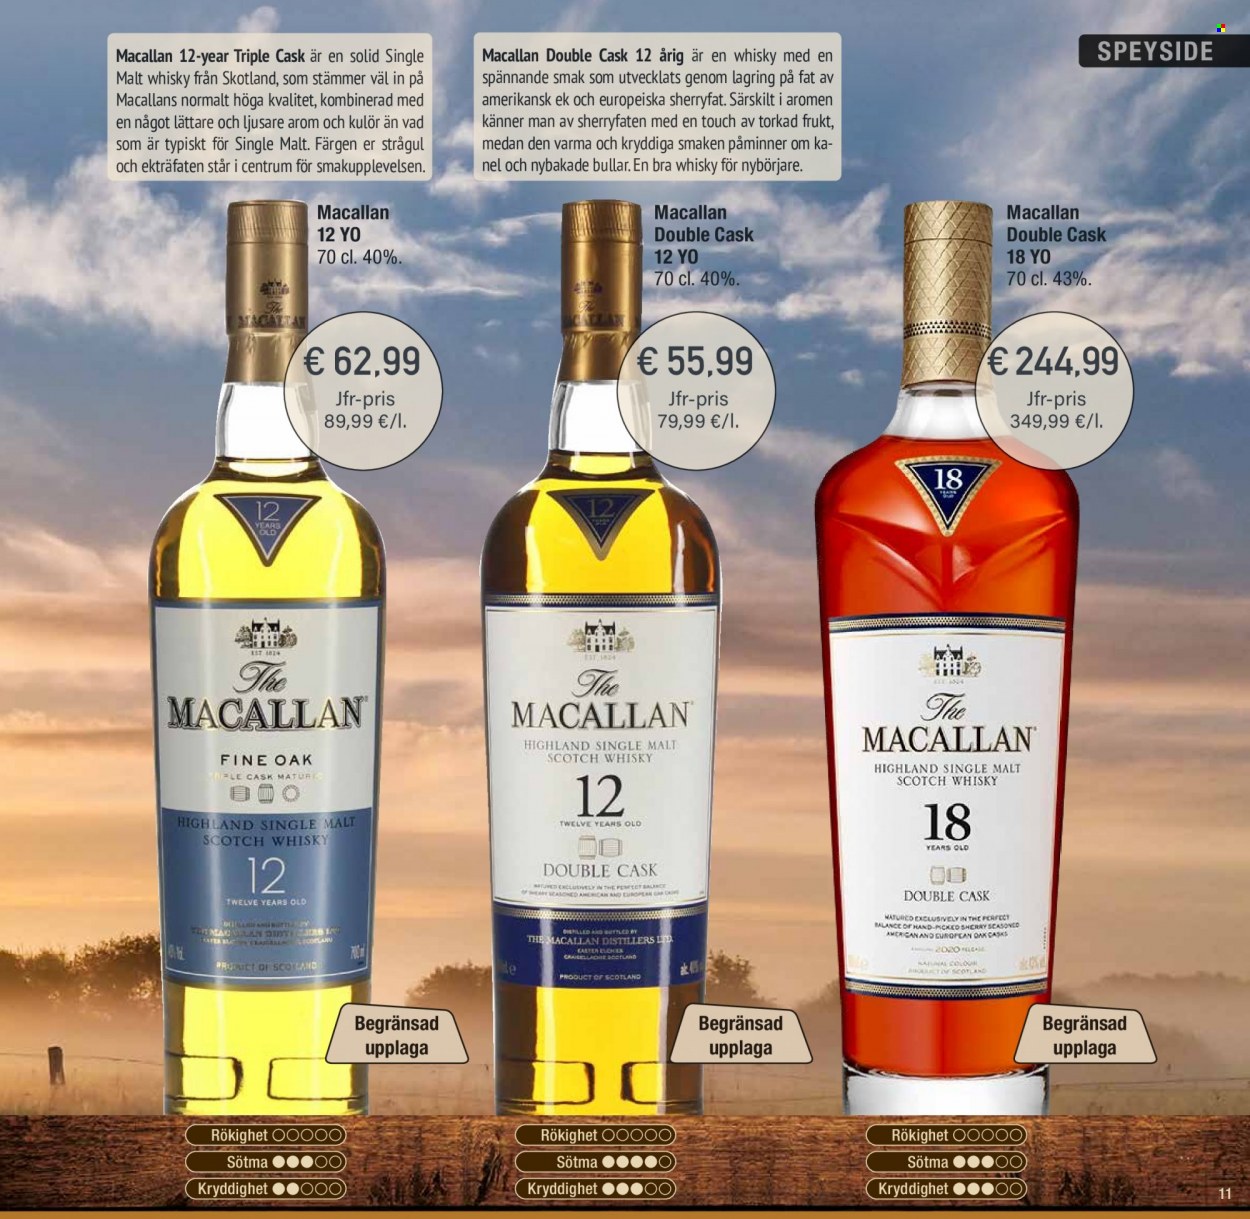 Calle reklamblad - 23/3 2022 - 31/12 2022 - varor från reklamblad - whisky, Macallan. Sida 11.